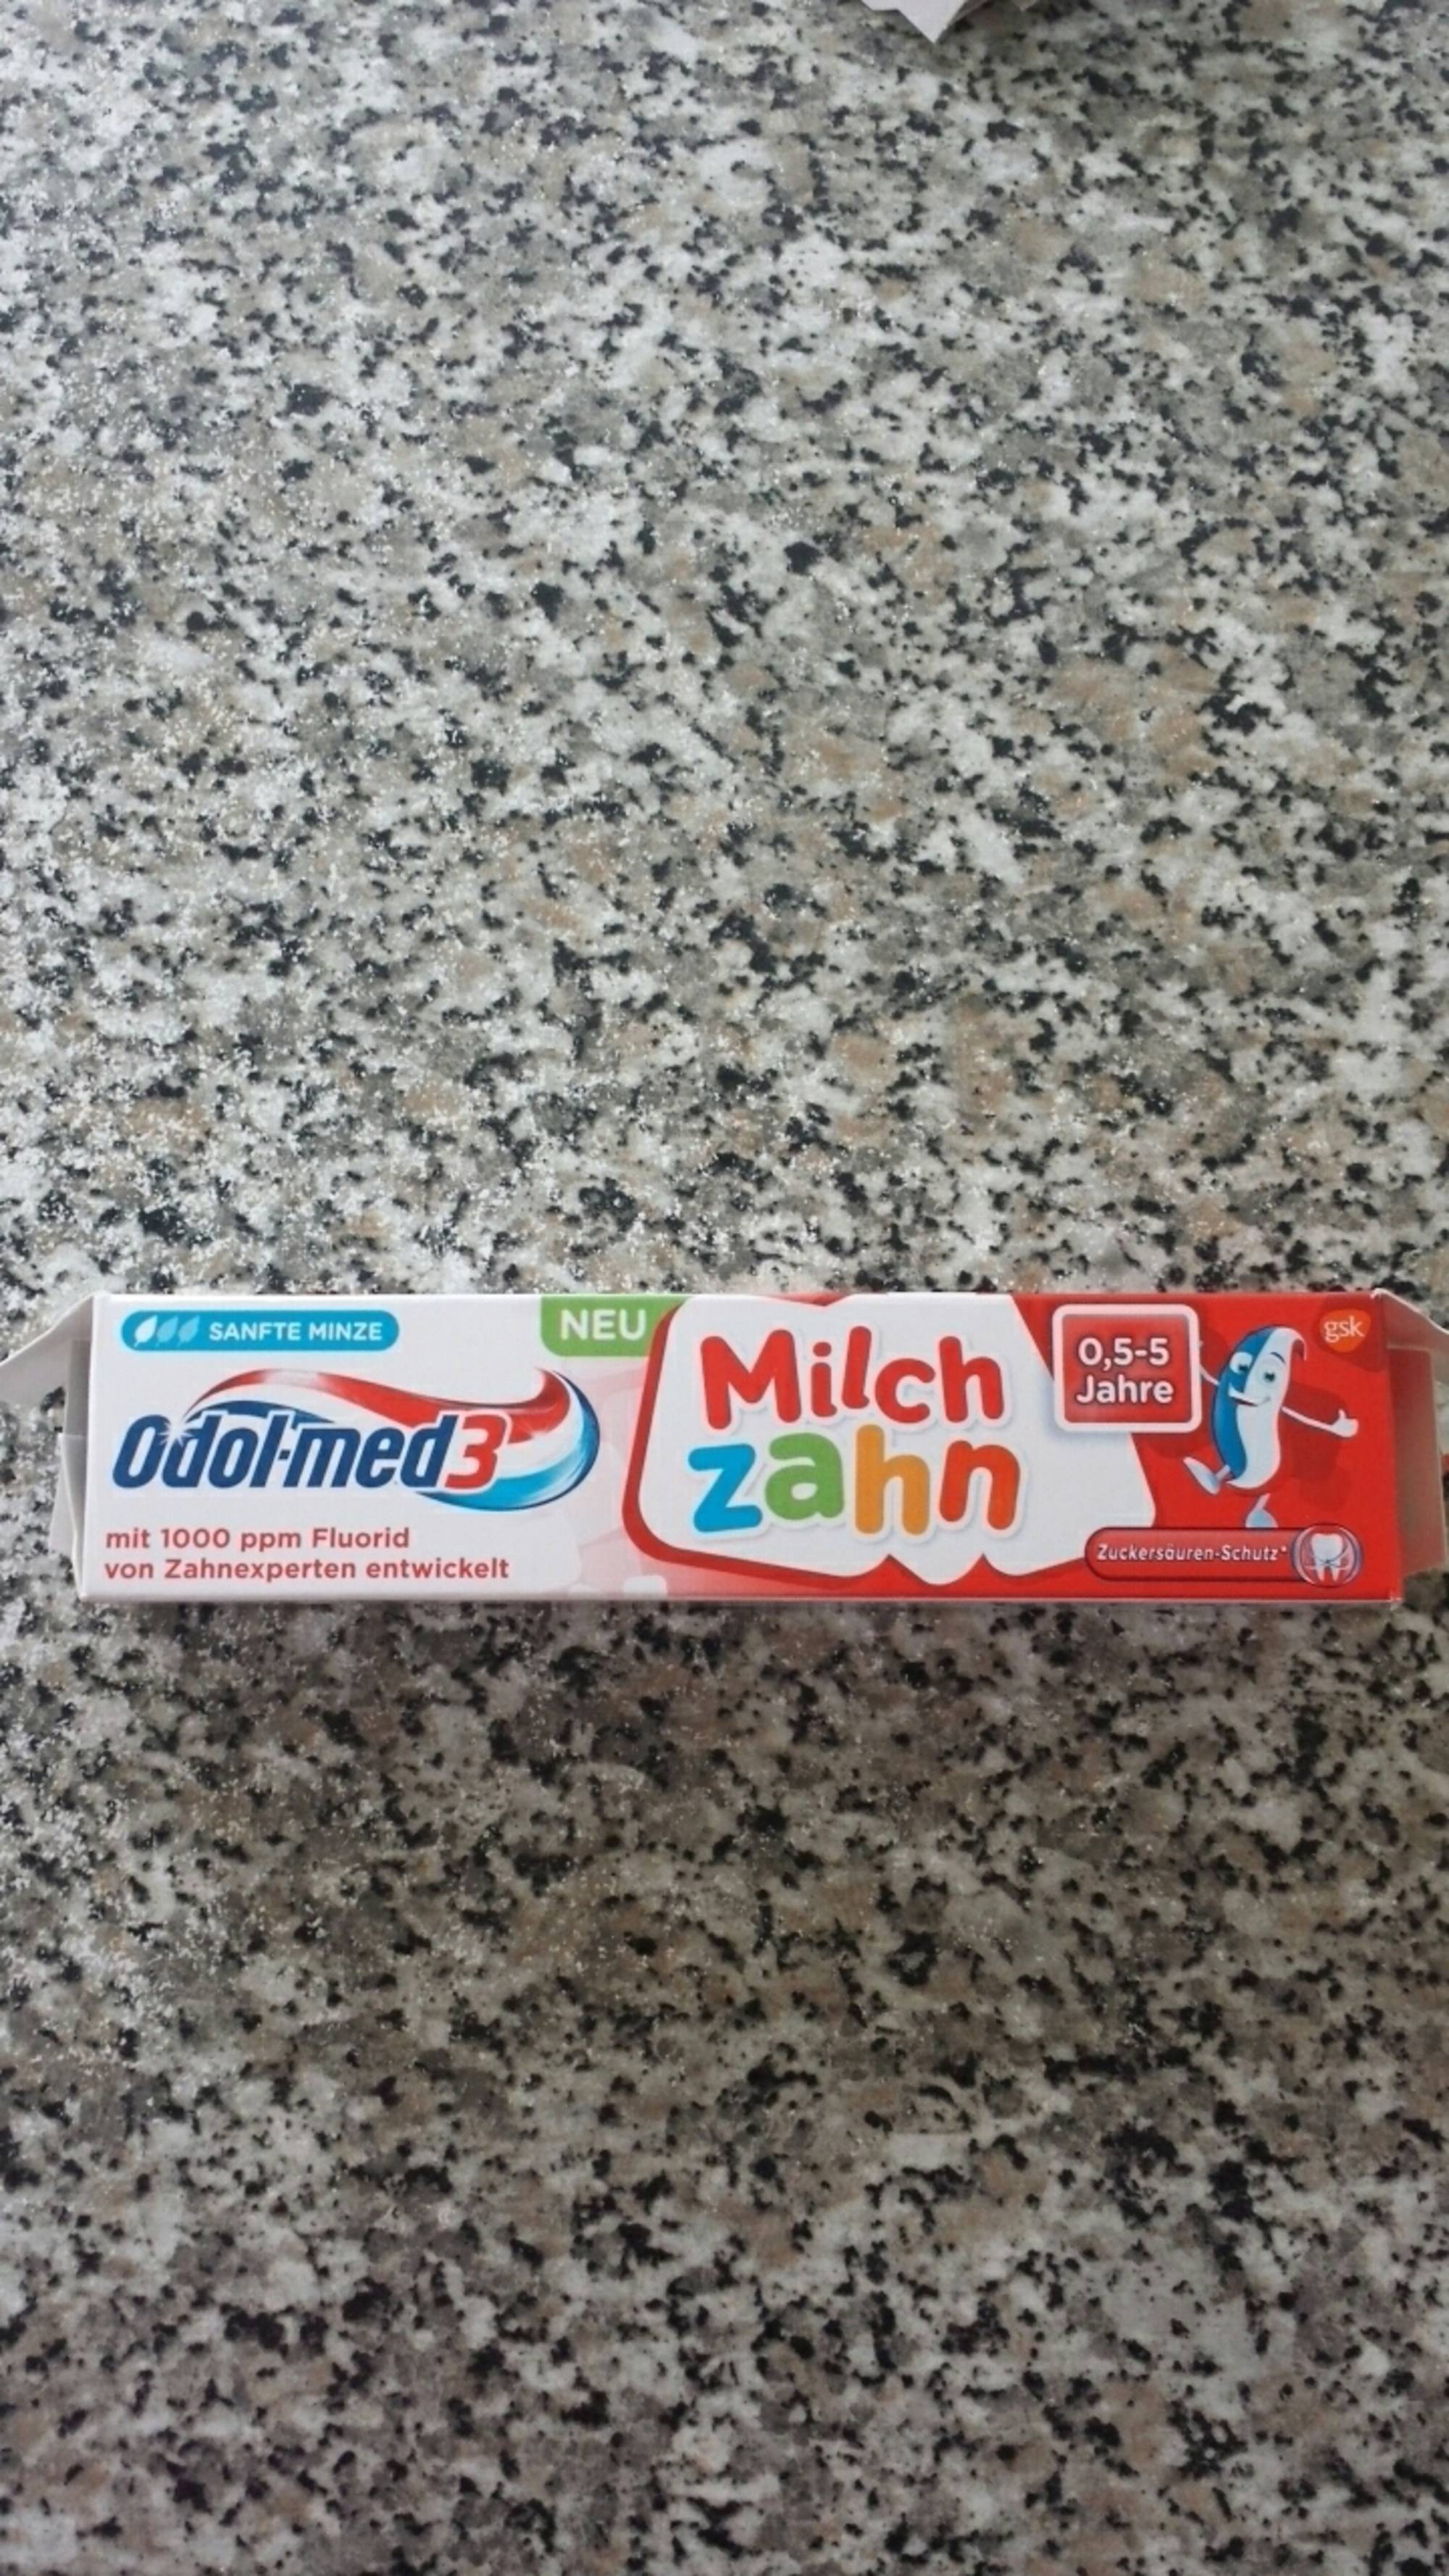 ODOL-MED3 - Milch zahn - Dentifrice enfant